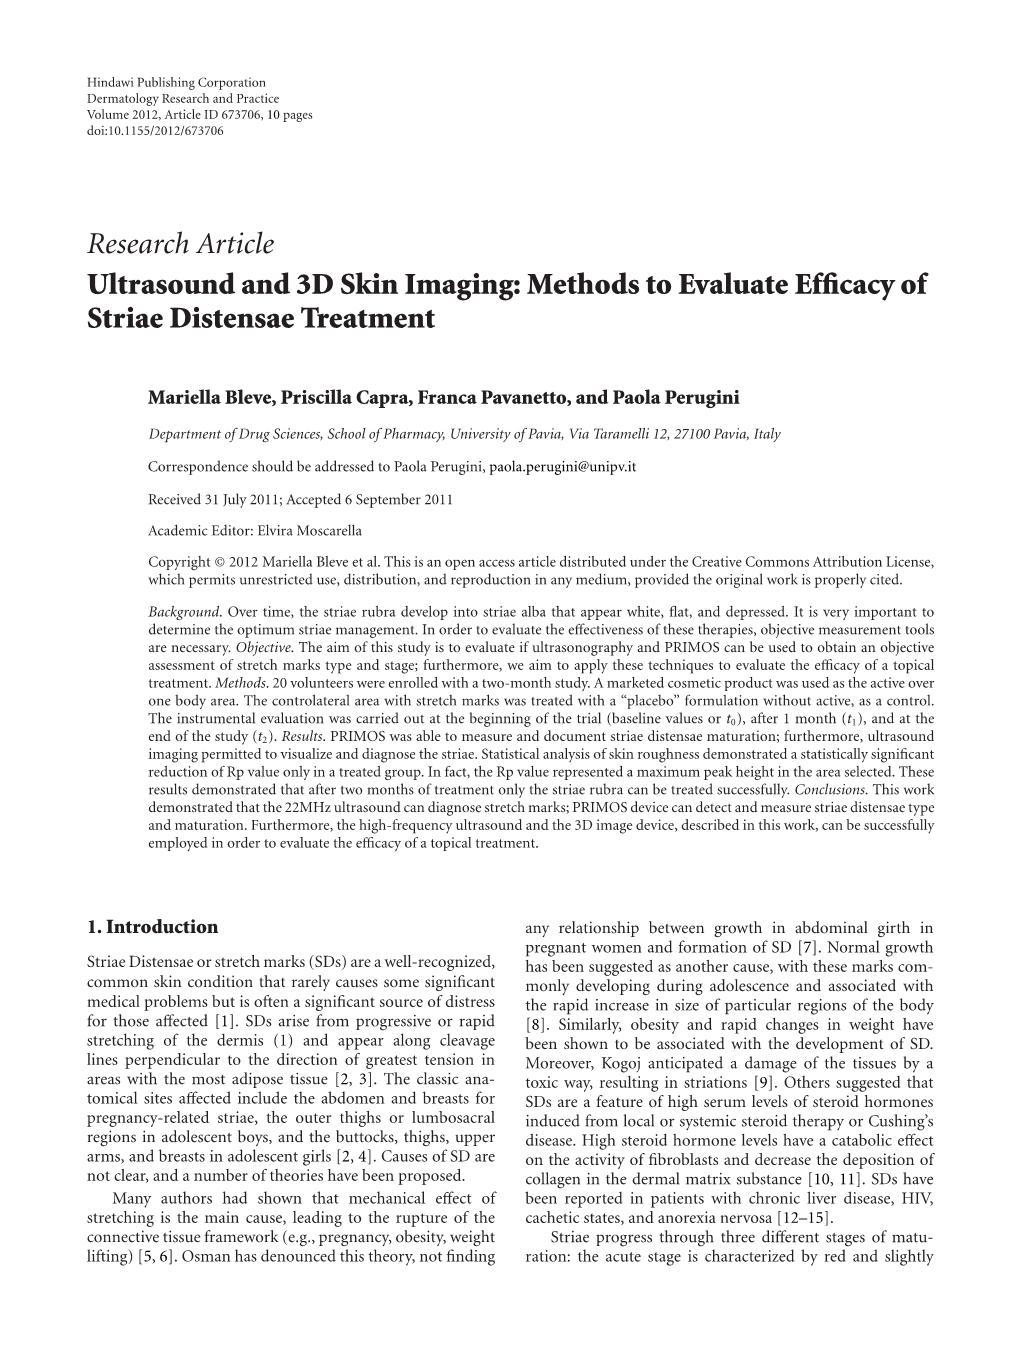 Methods to Evaluate Efficacy of Striae Distensae Treatment